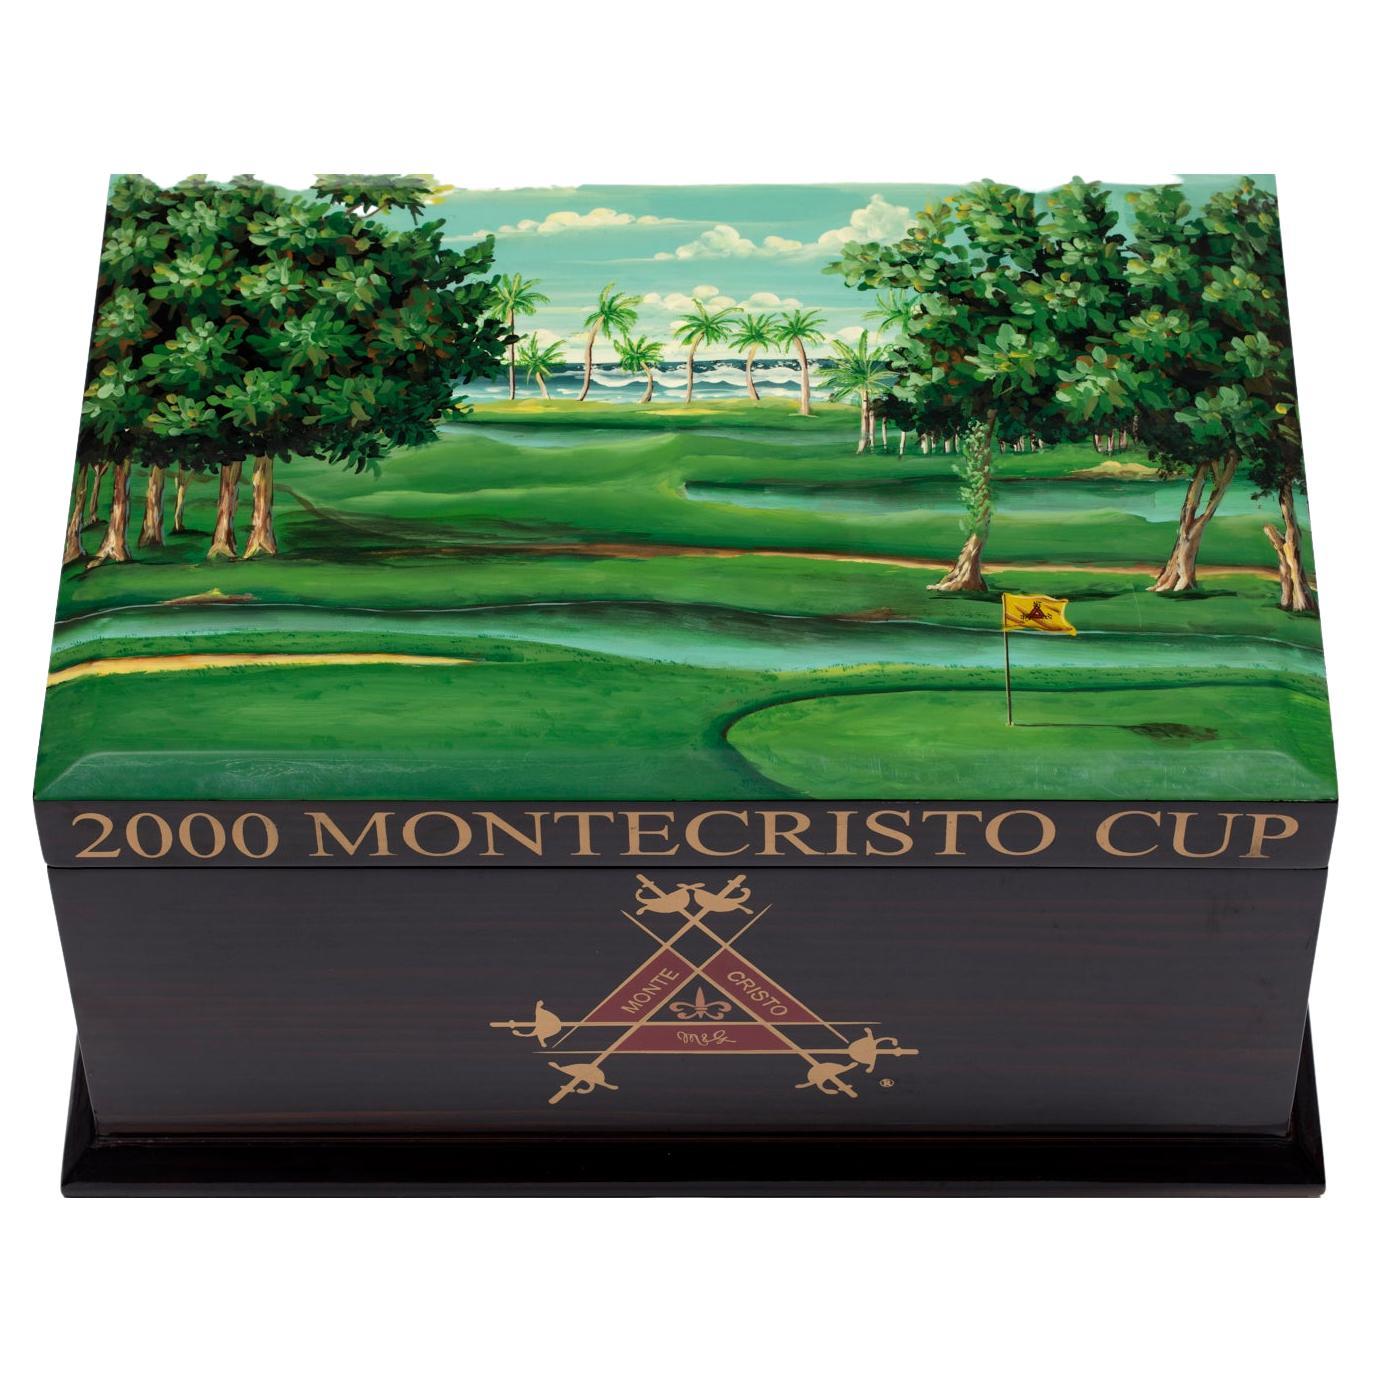 Montecristo Cup 2000 Humidor Limited Edition